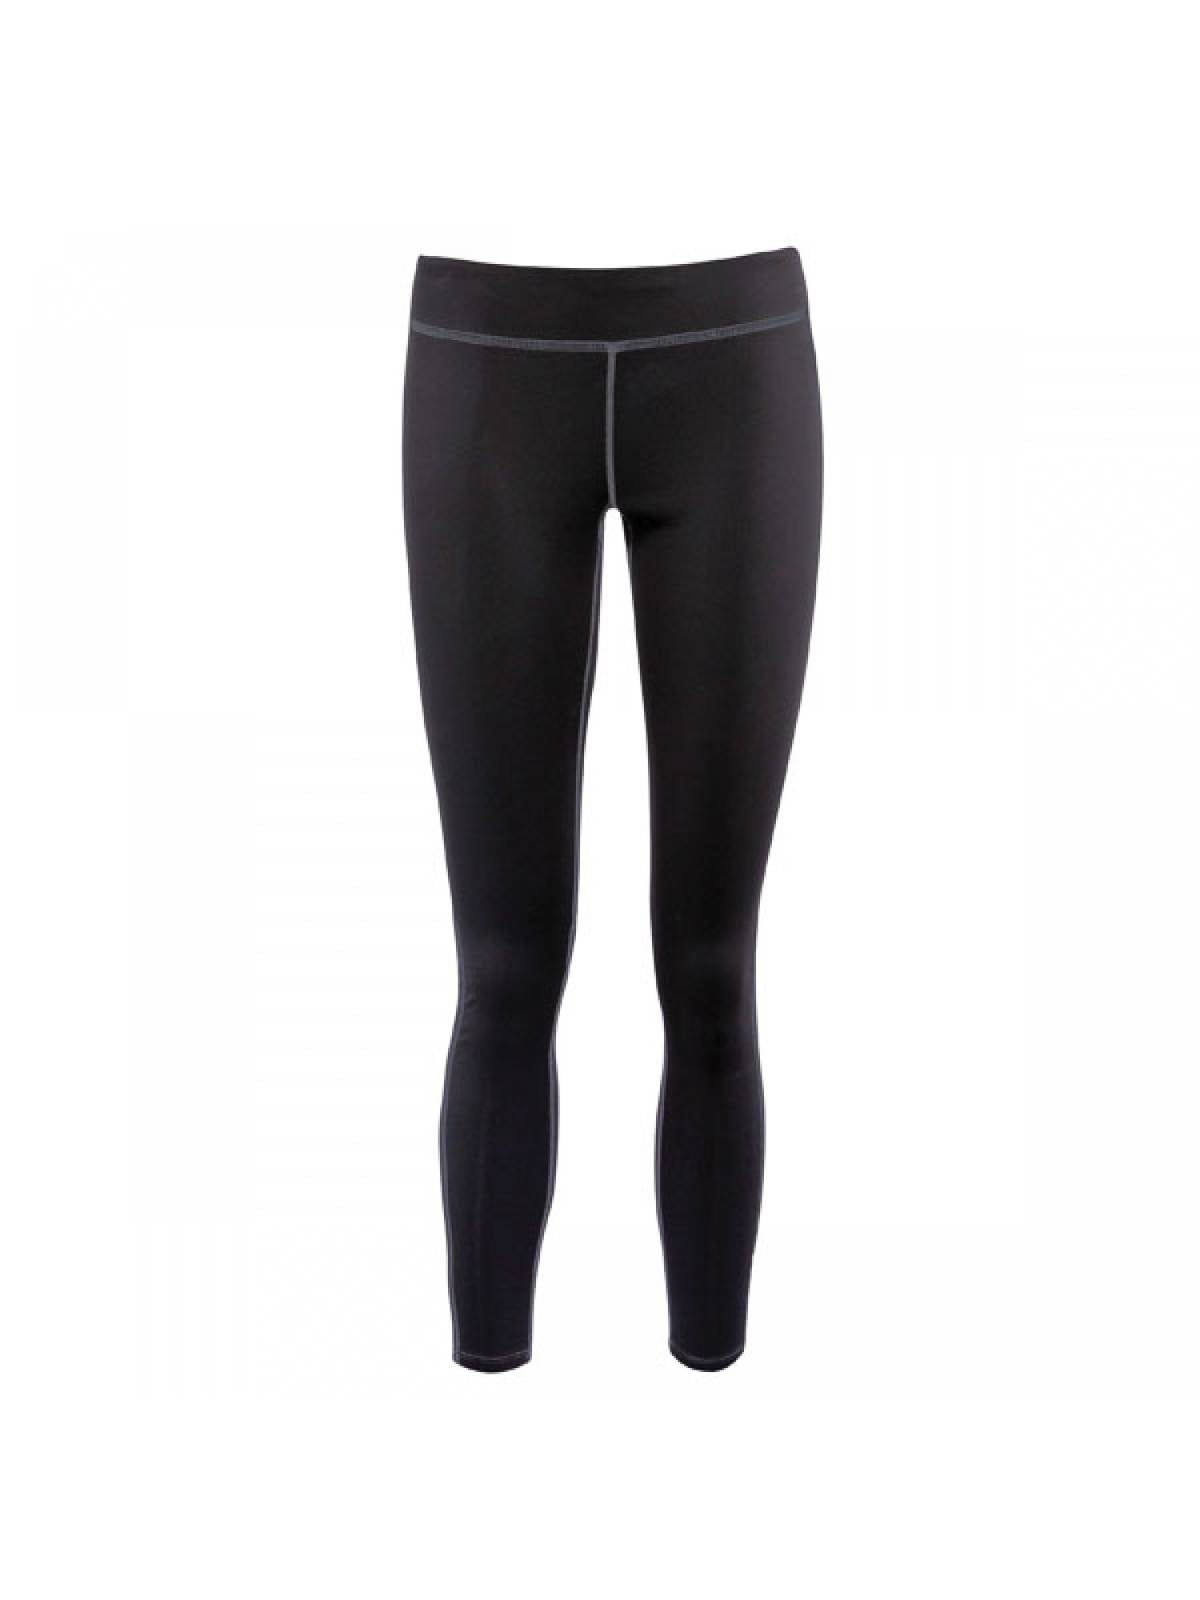 Avamo 7/8 Length Sports Compression Pants Plus Size for Women